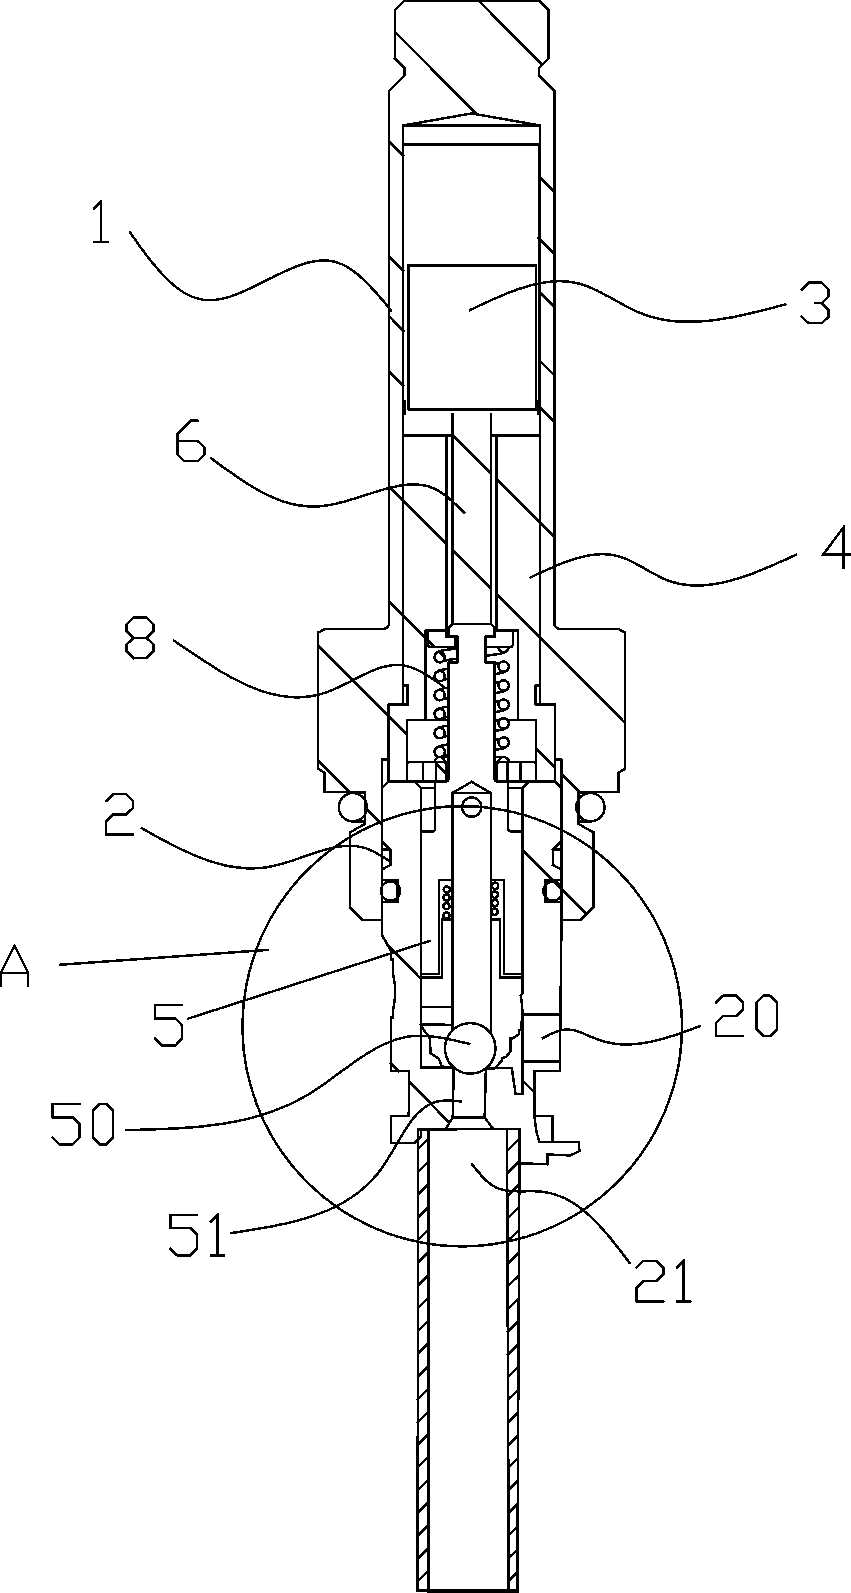 a solenoid valve